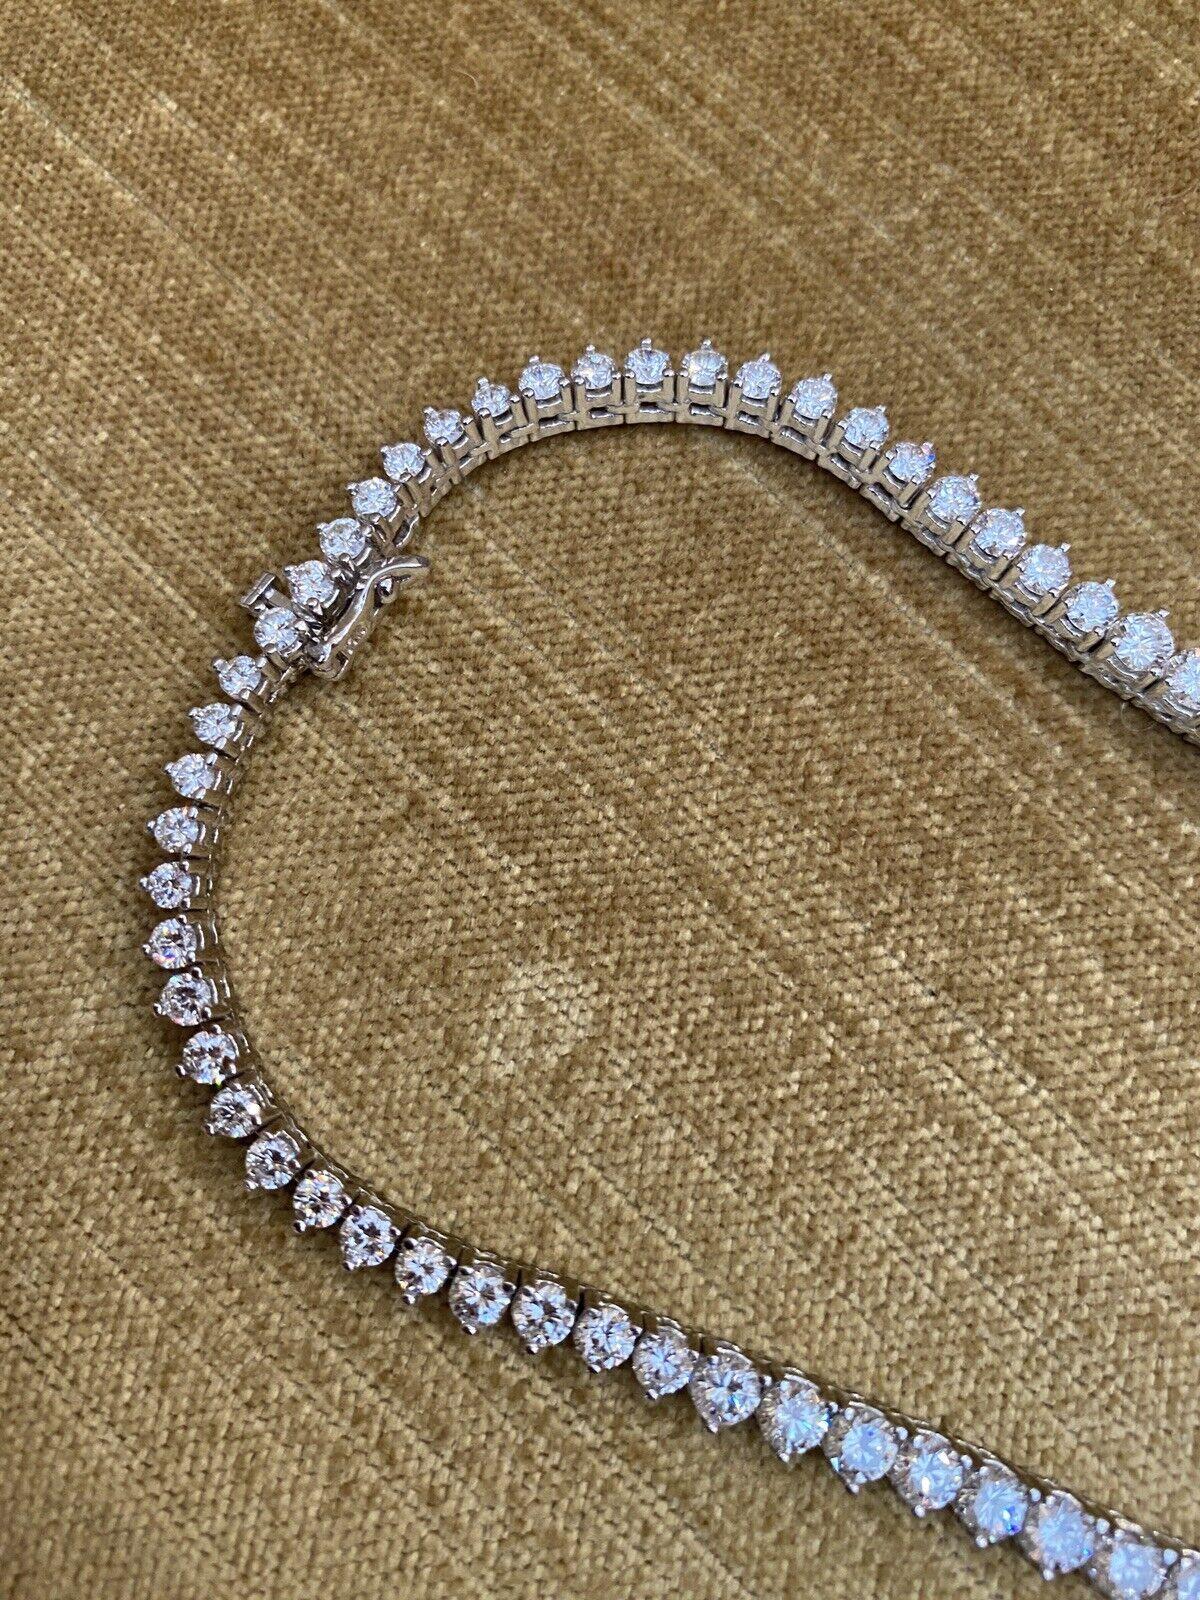 Graduated Diamond Riviera Necklace 19.45 Carats in 14k White Gold 15 inches In Excellent Condition For Sale In La Jolla, CA